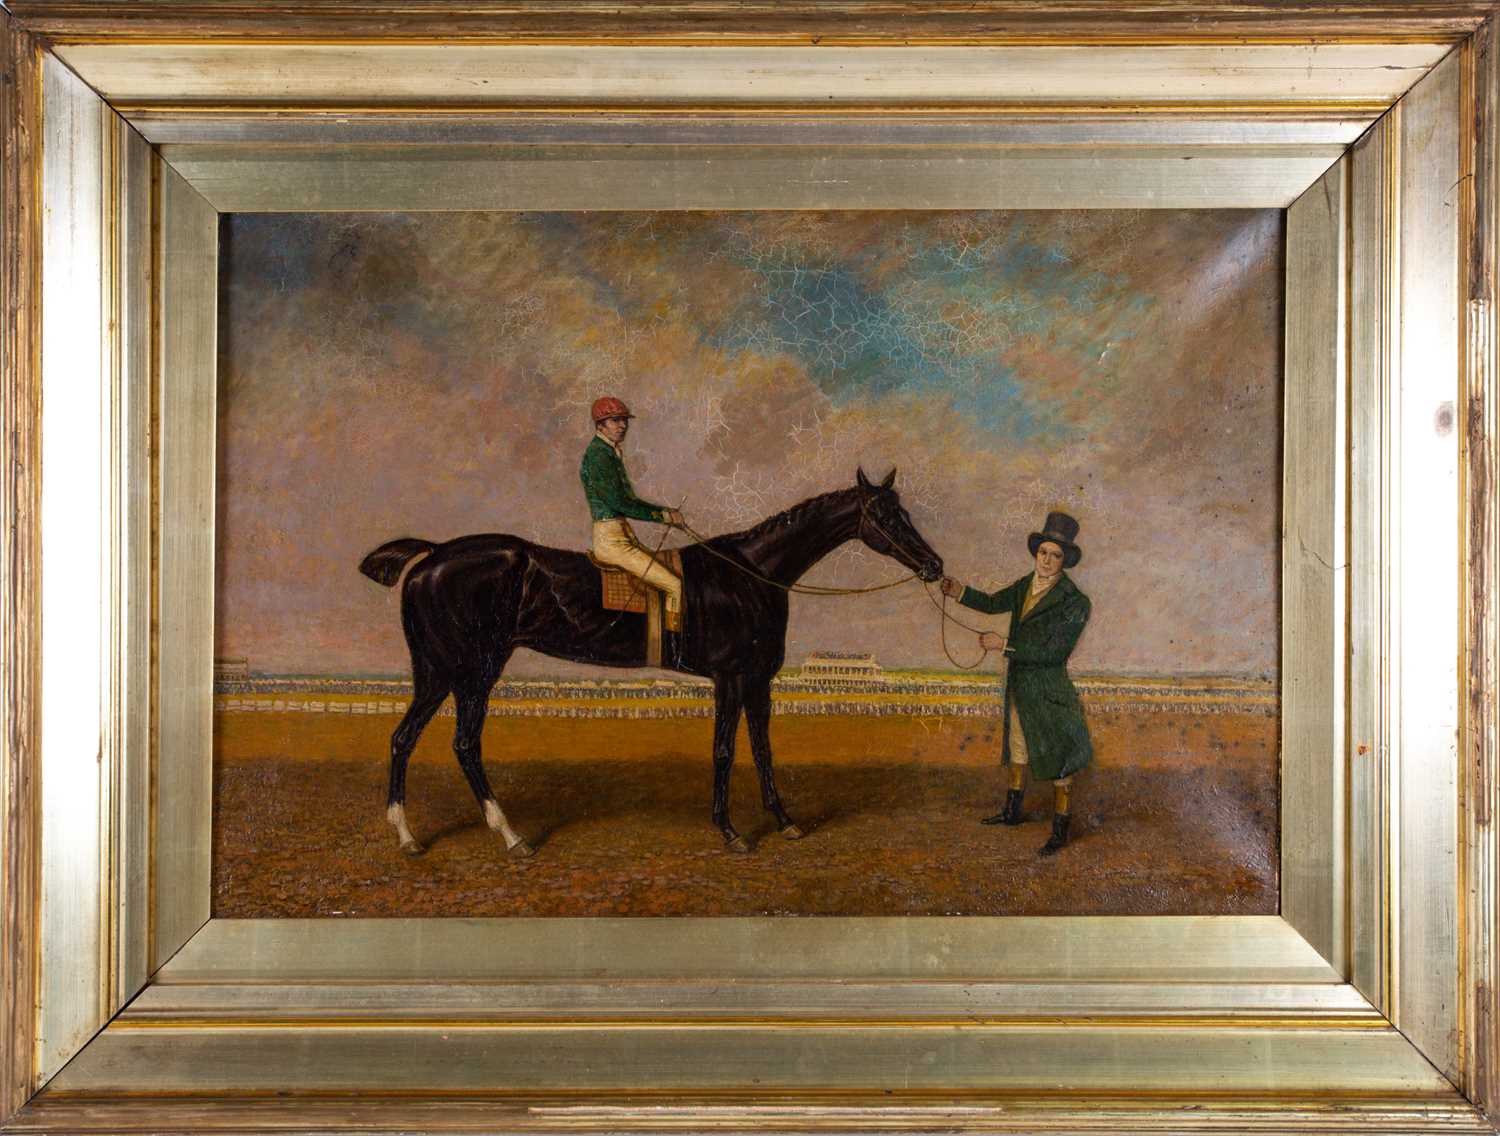 After John Frederick Herring Sr (1795-1865): "Race horse", oil on canvas, 60cm x 39.5cm high